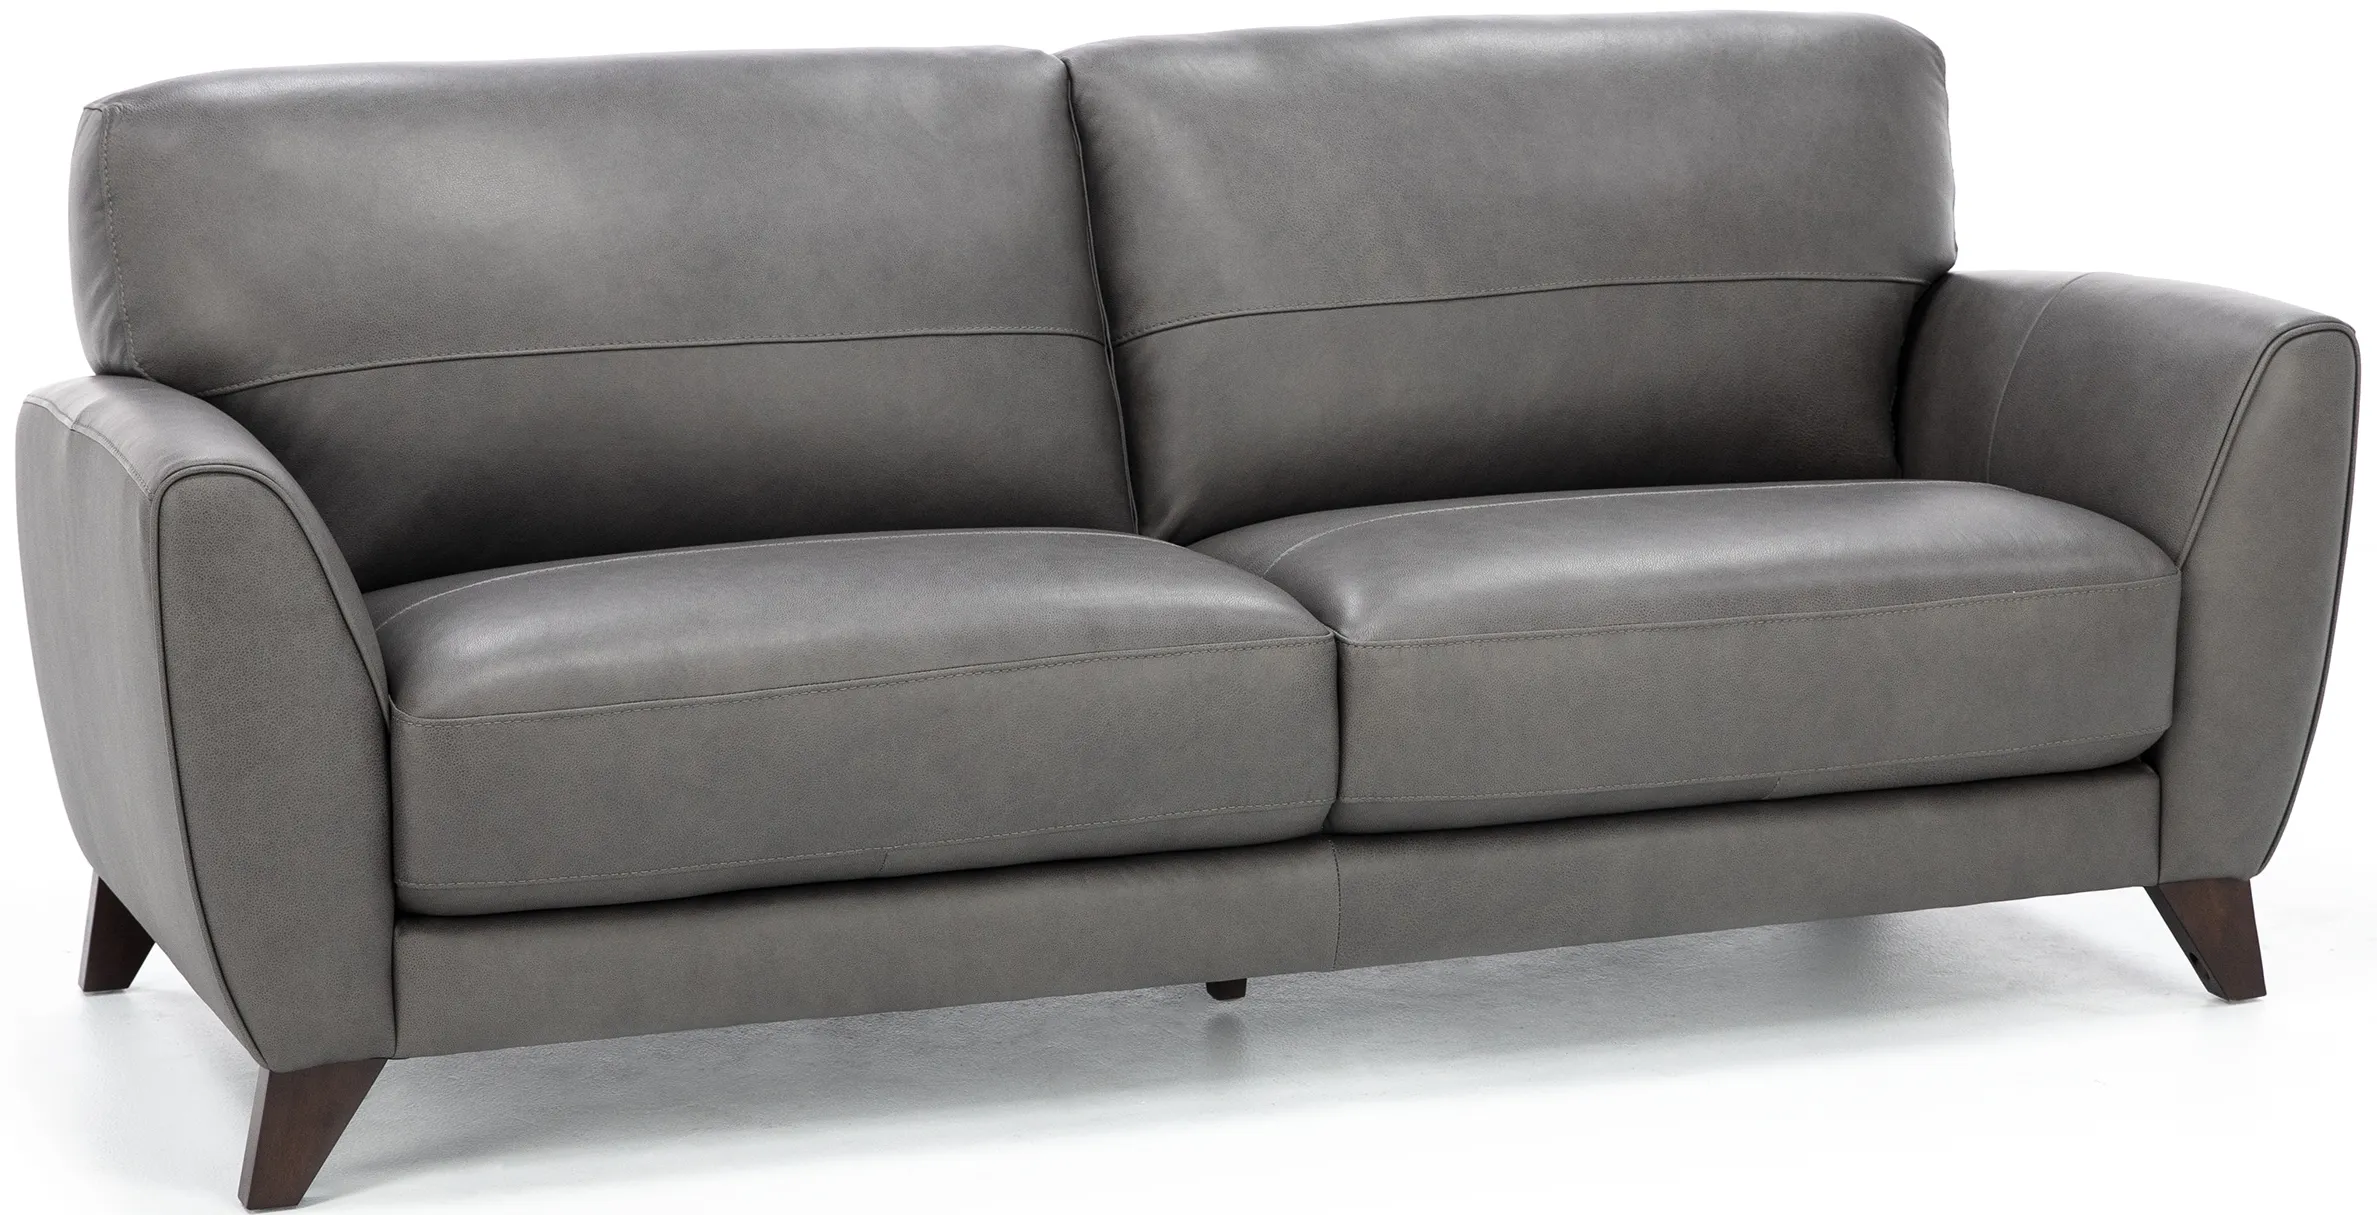 Martini Leather Sofa in Charcoal